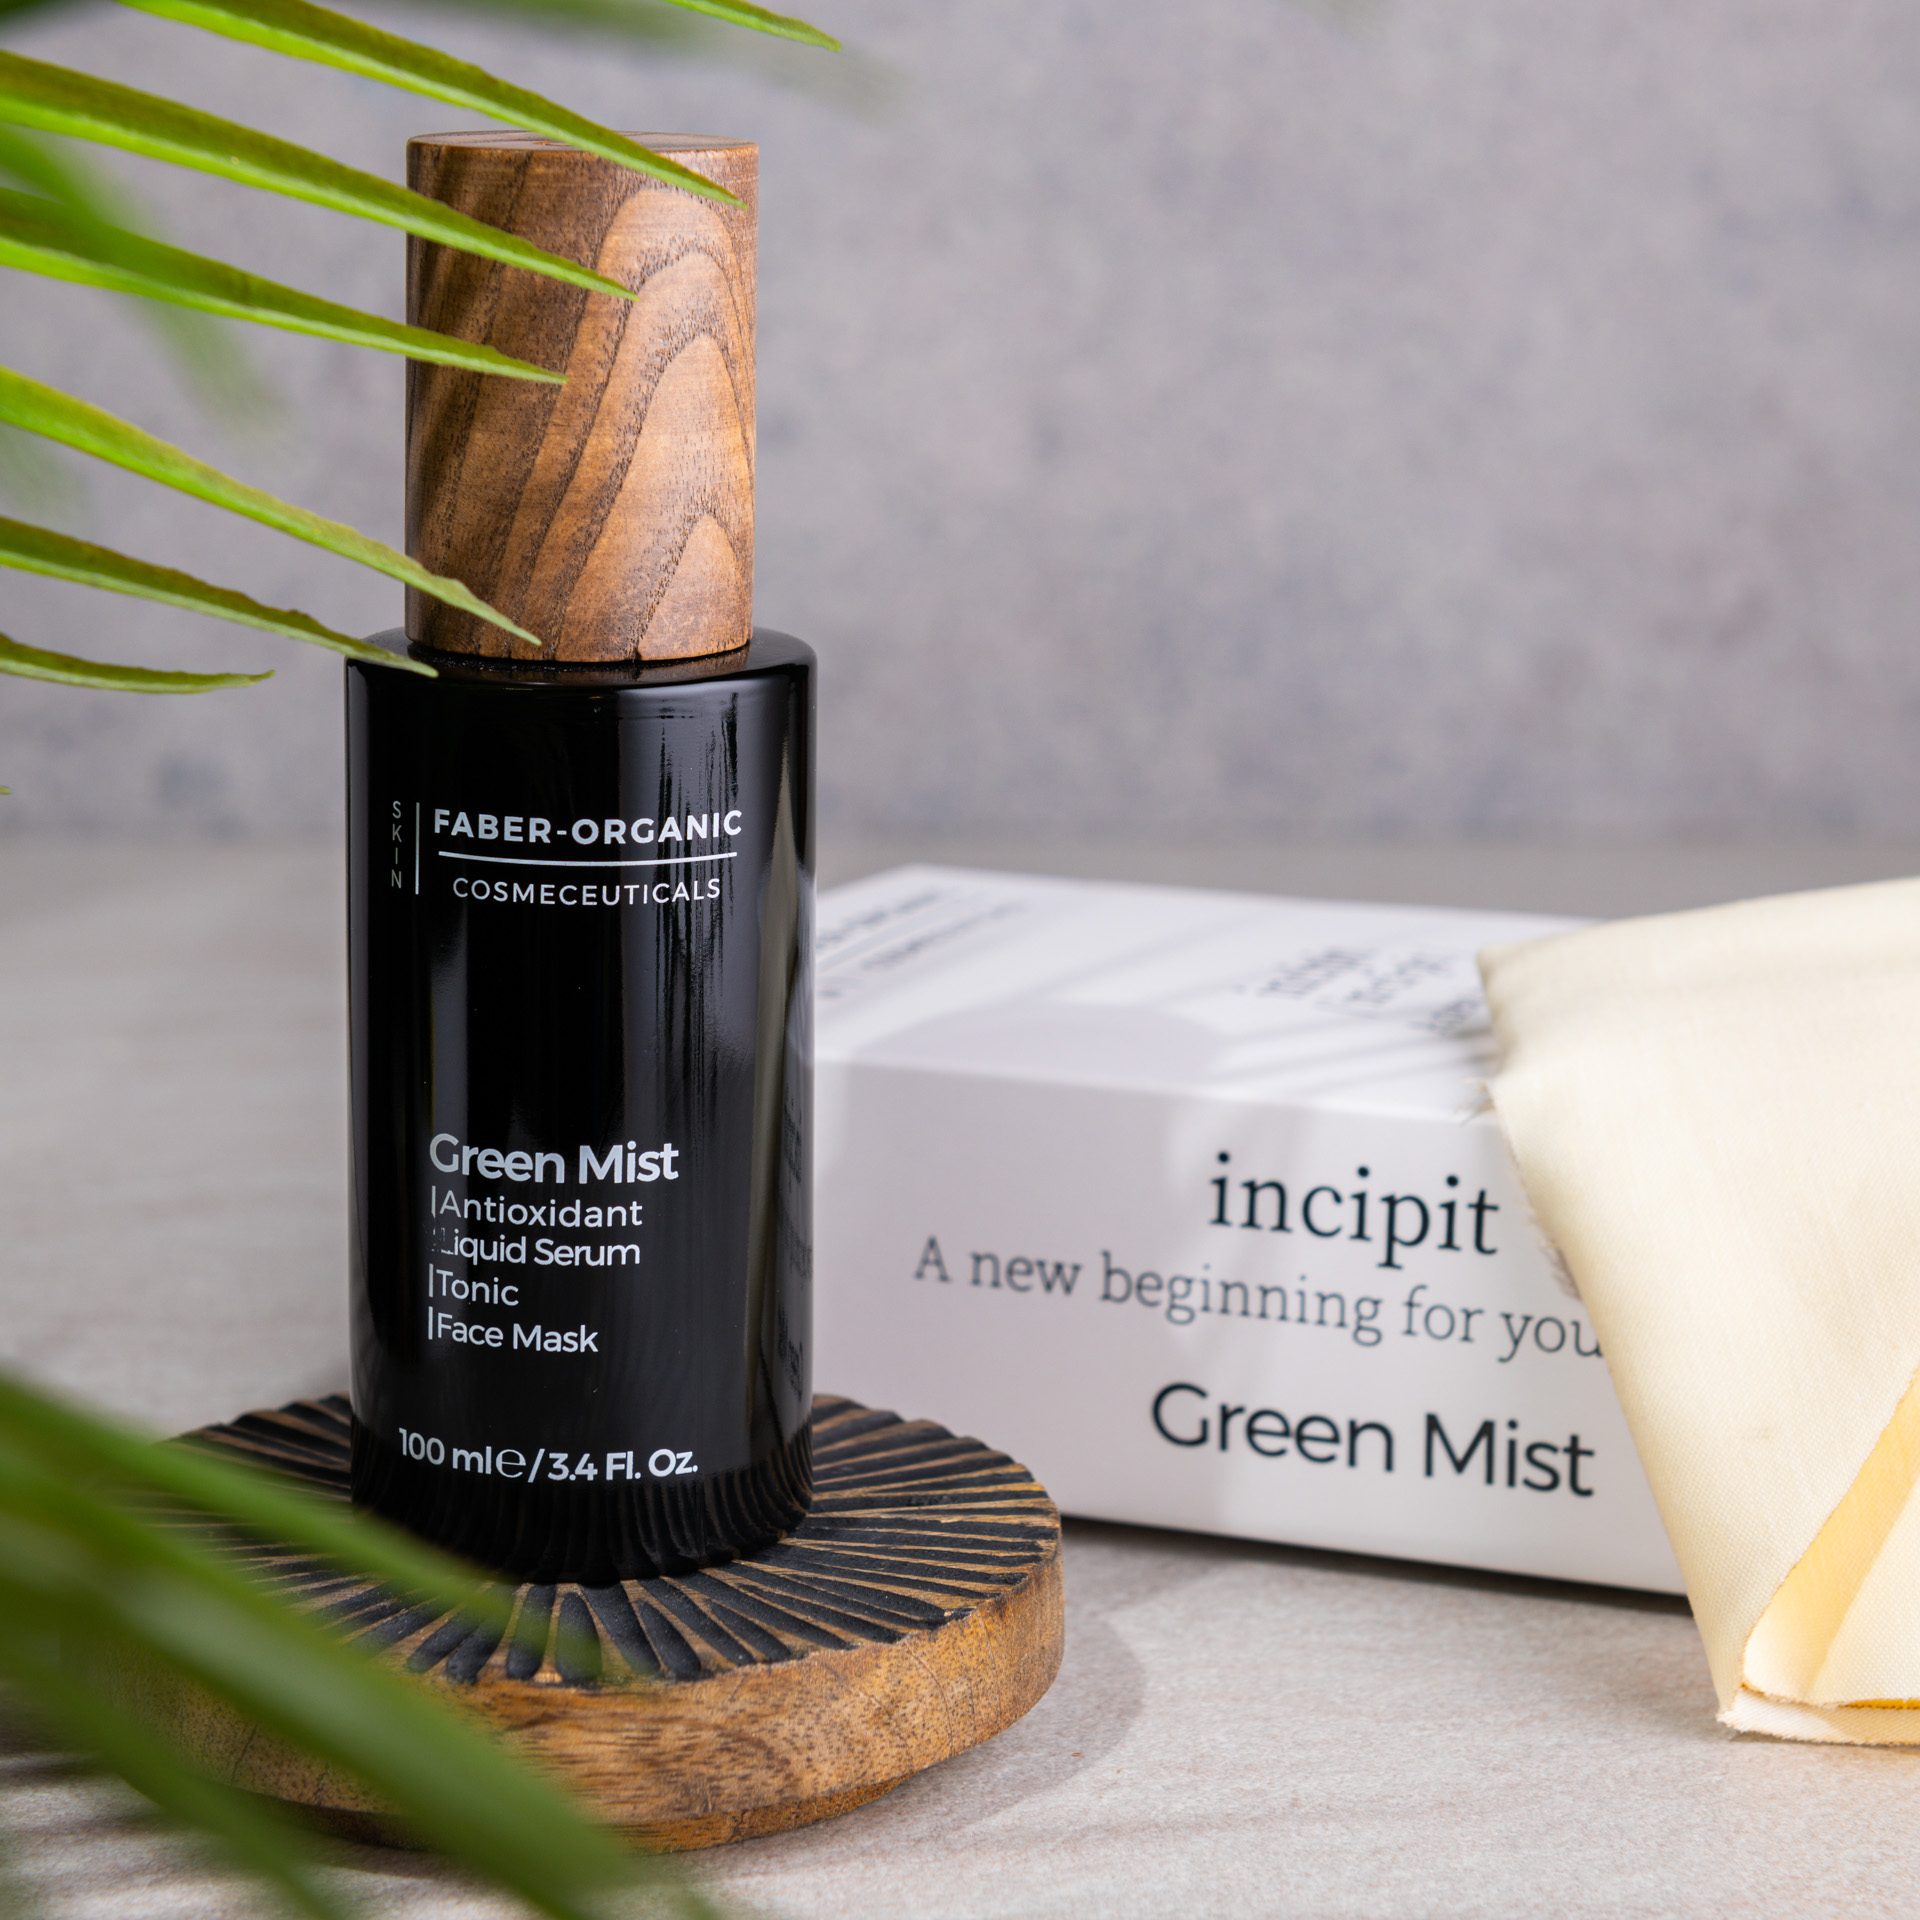 Green Mist - Antioxidant Liquid Serum - Tonic - Face Mask